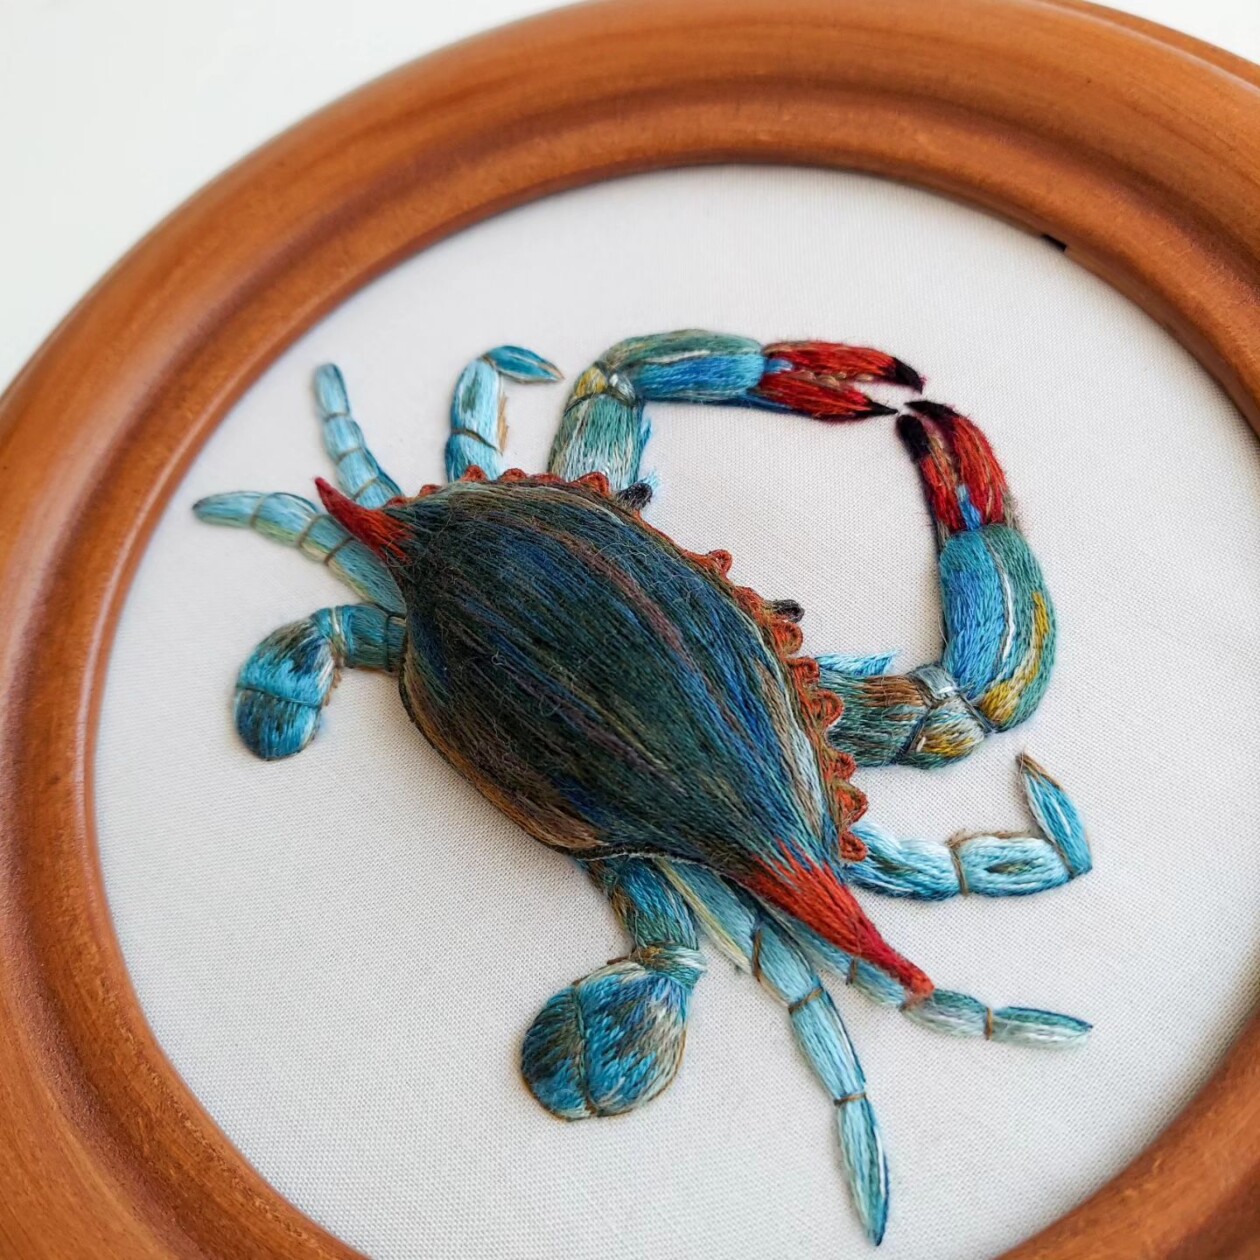 Life Like Three Dimensional Animal Embroideries By Megan Zaniewski (1)